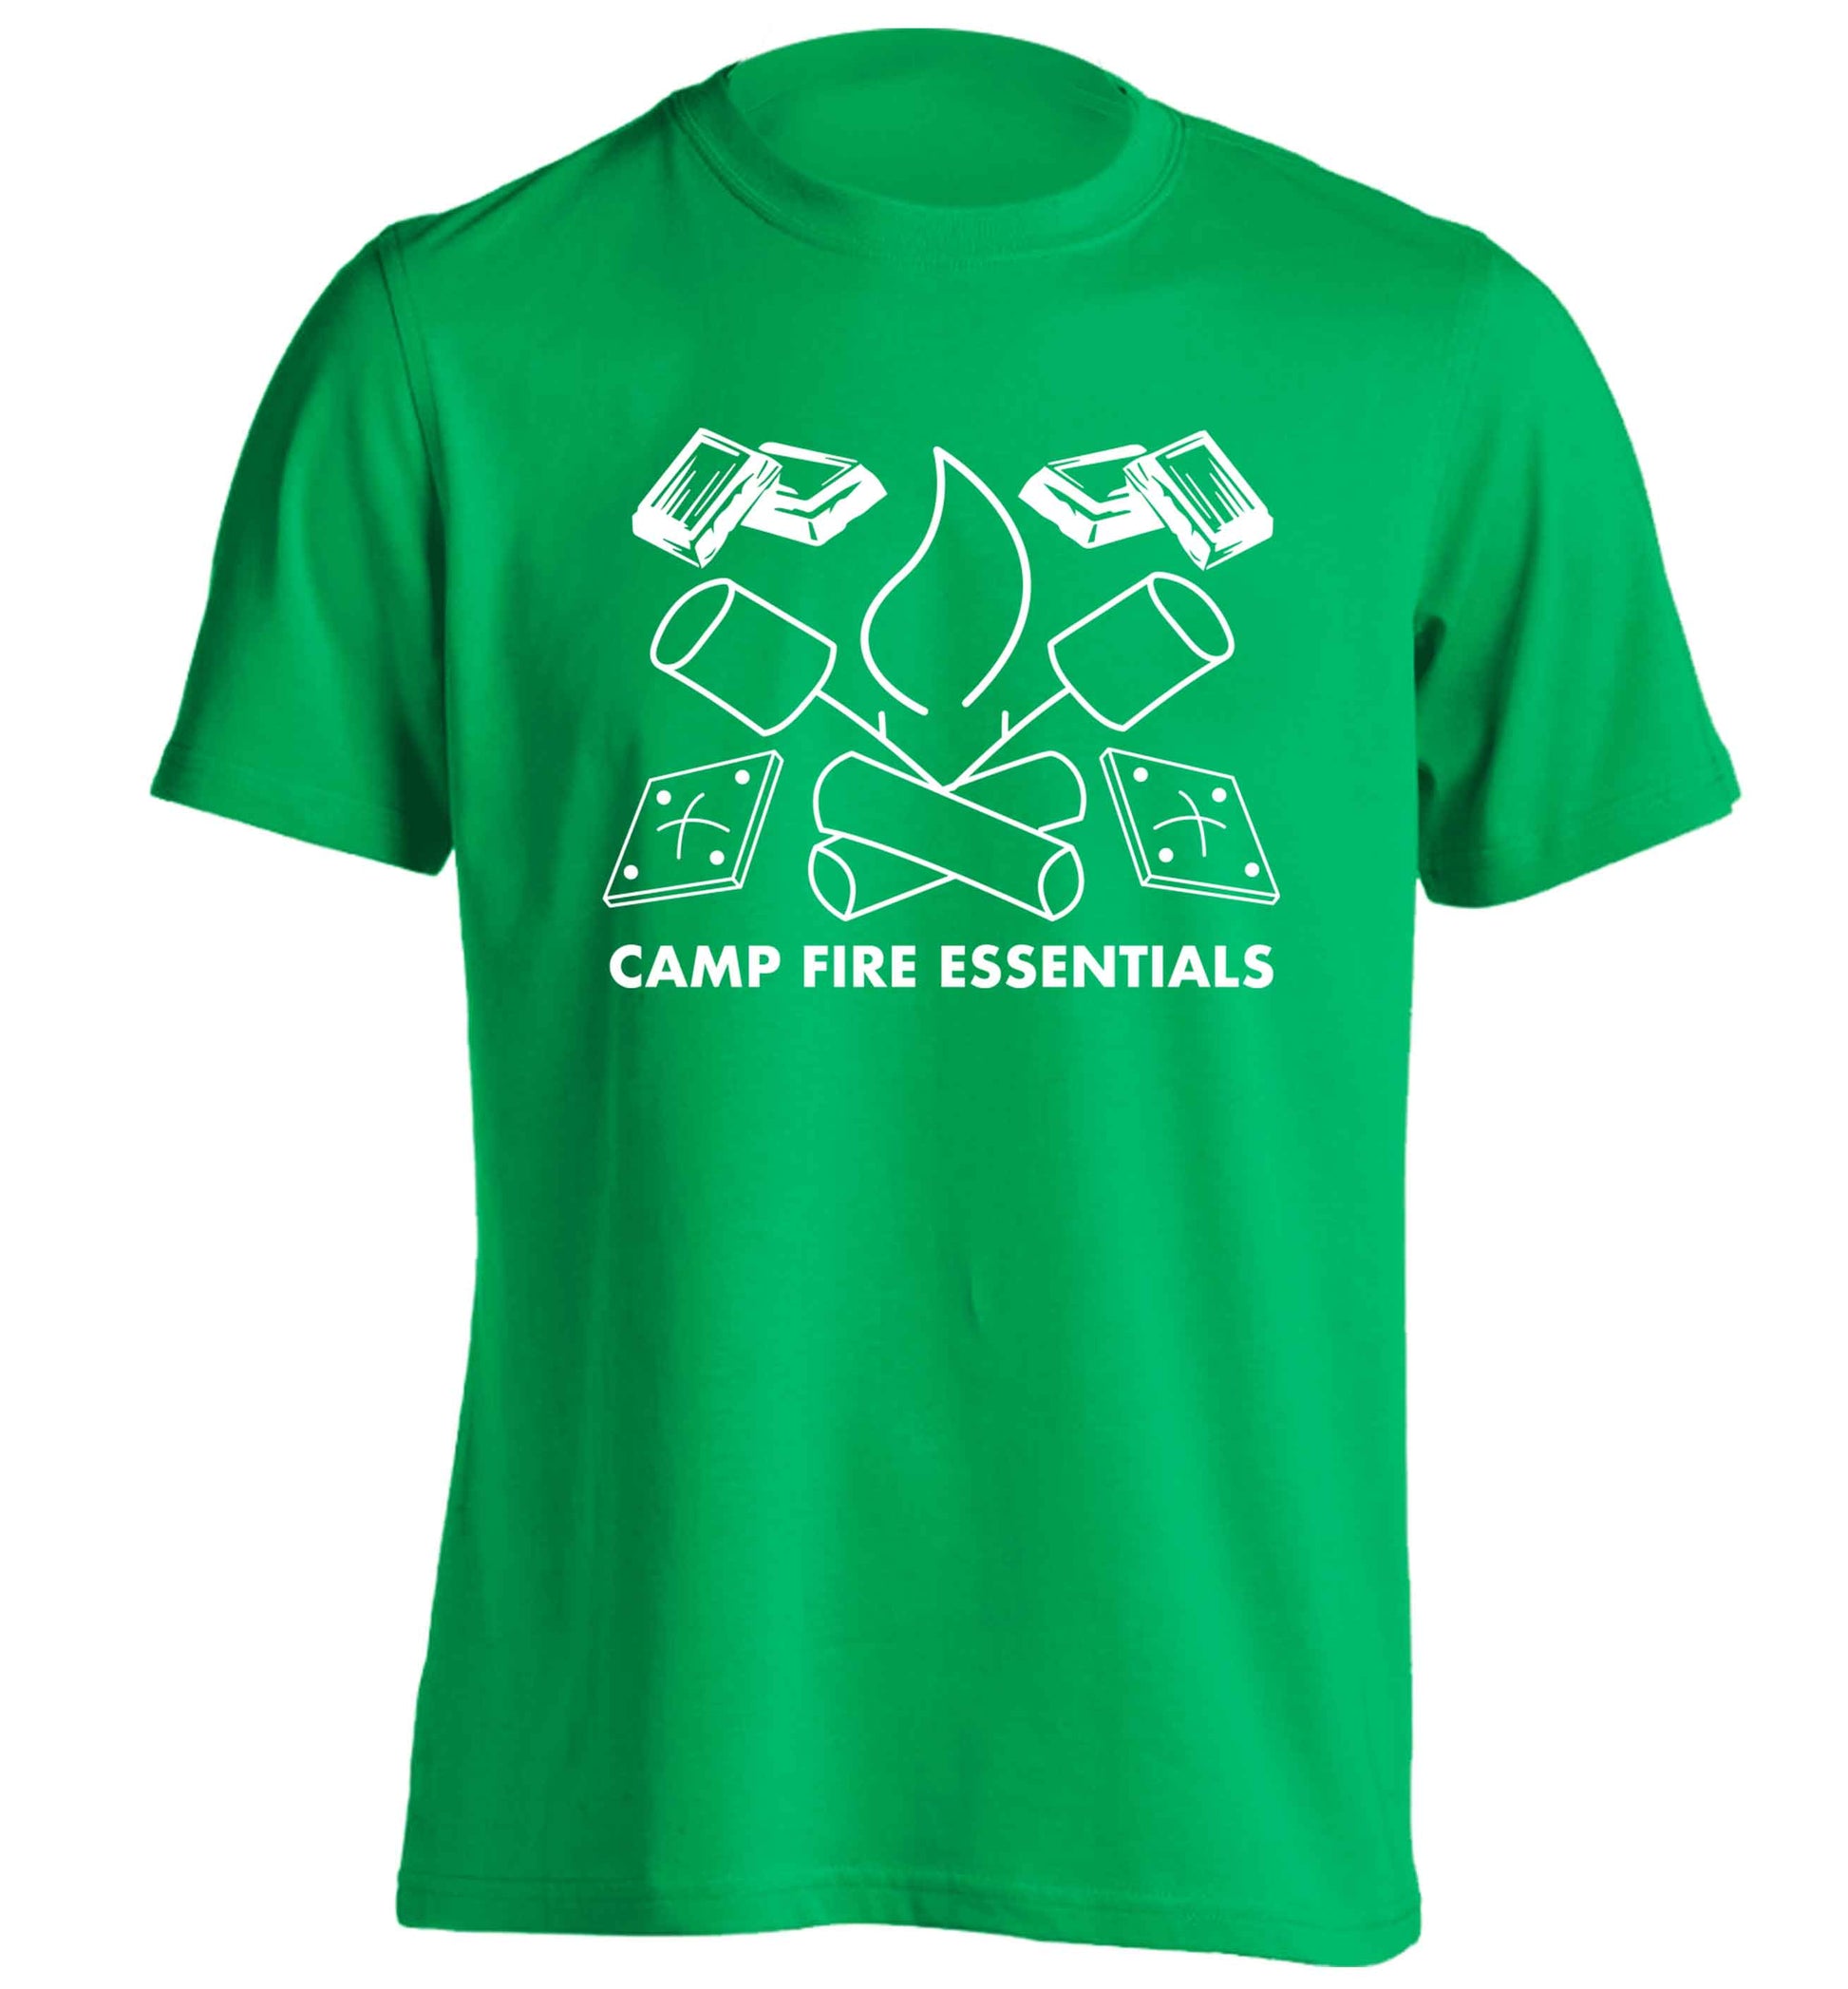 Campfire essentials adults unisex green Tshirt 2XL